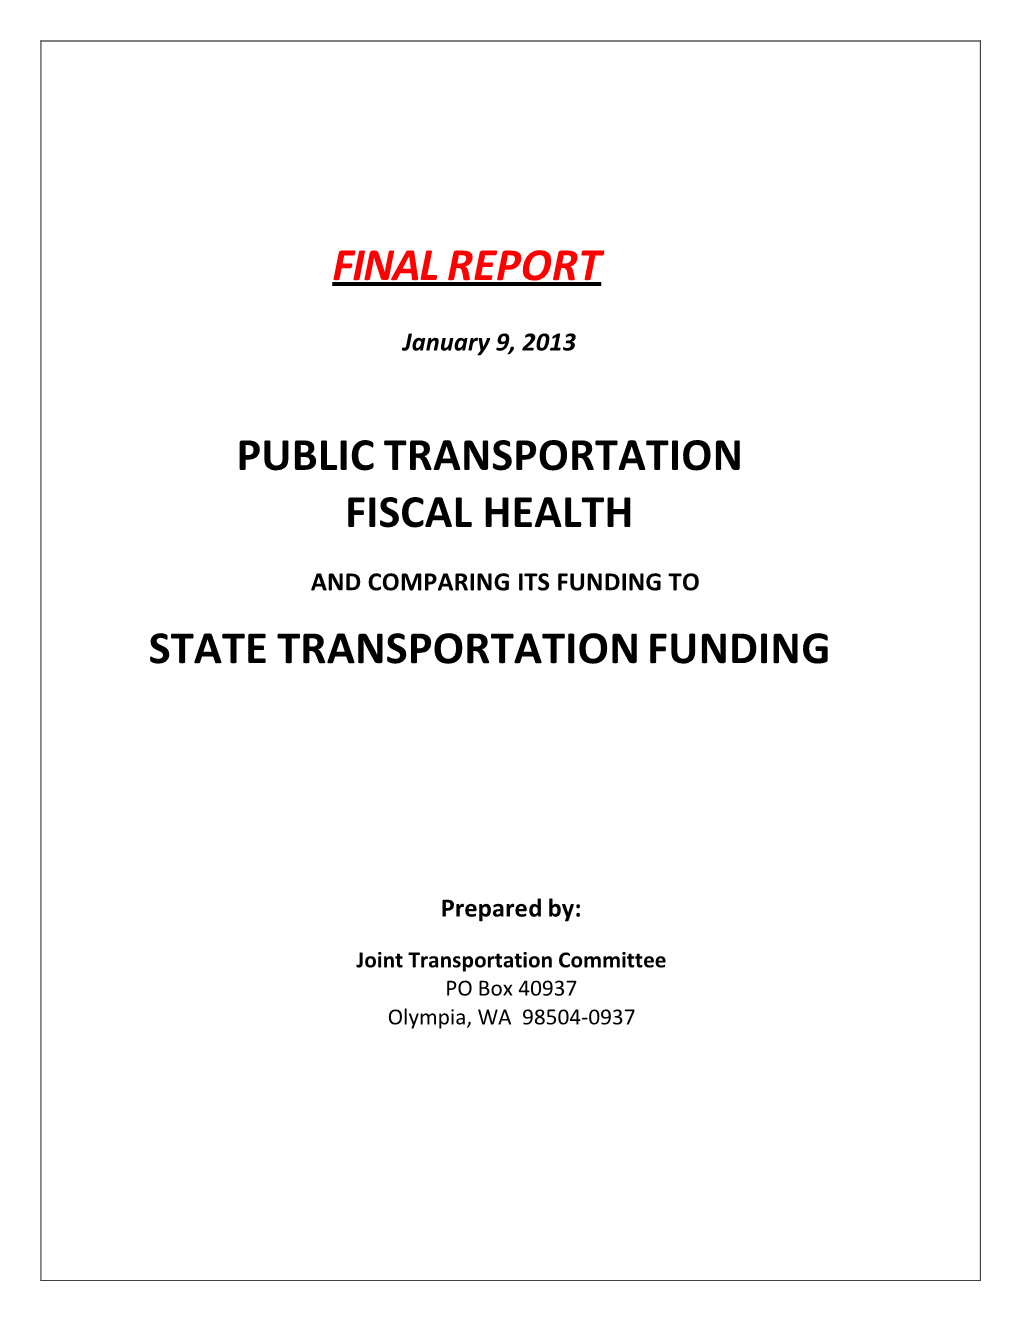 Public Transportation Fiscal Health Final Report